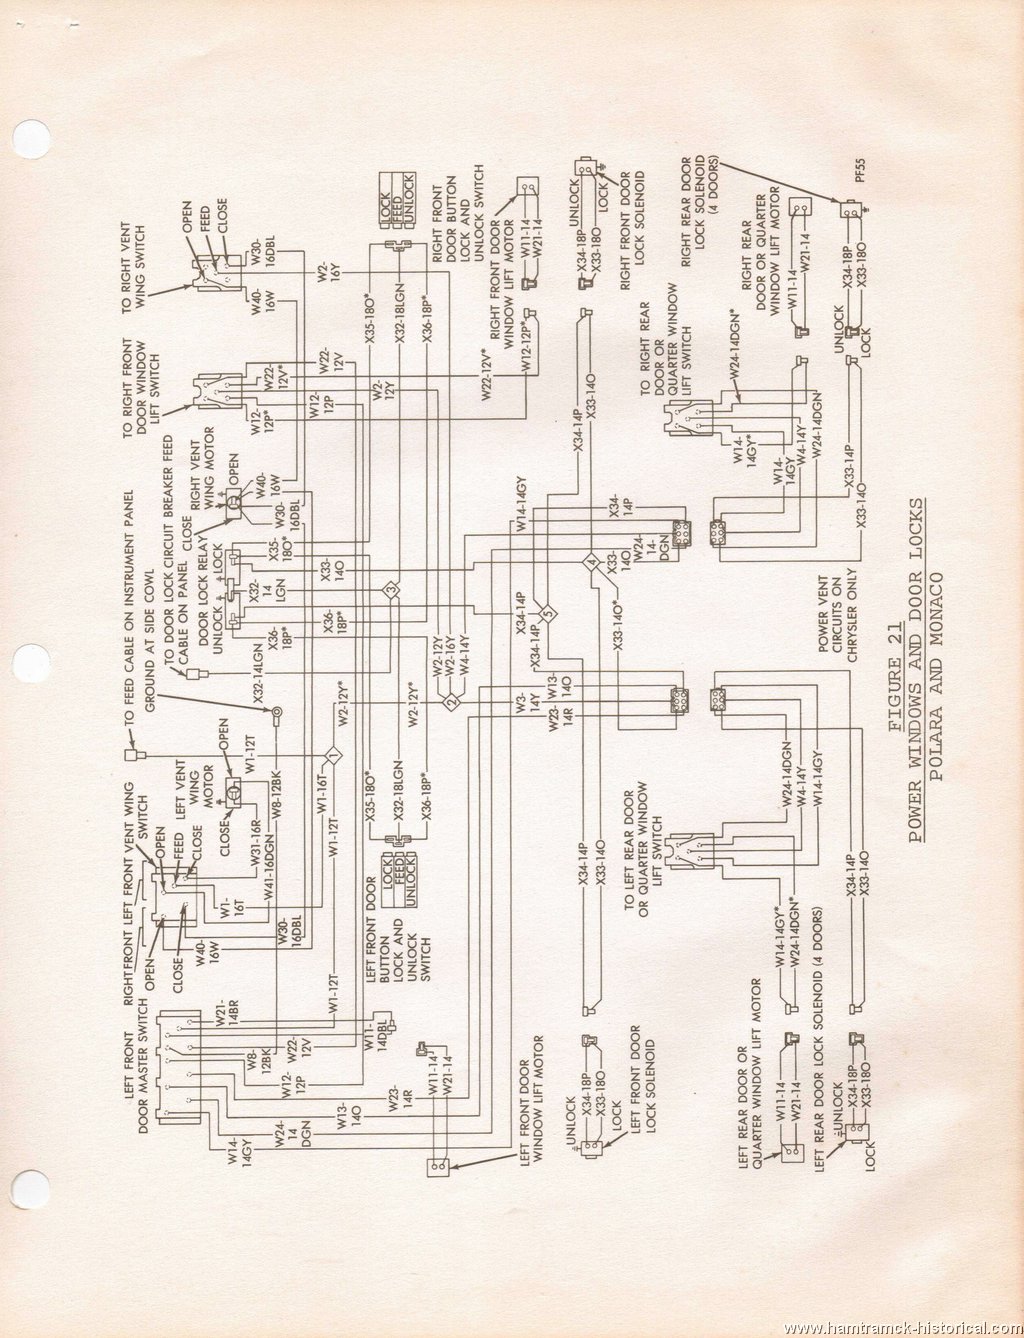 The 1970 Hamtramck Registry "1972 Dodge TSBs" Page